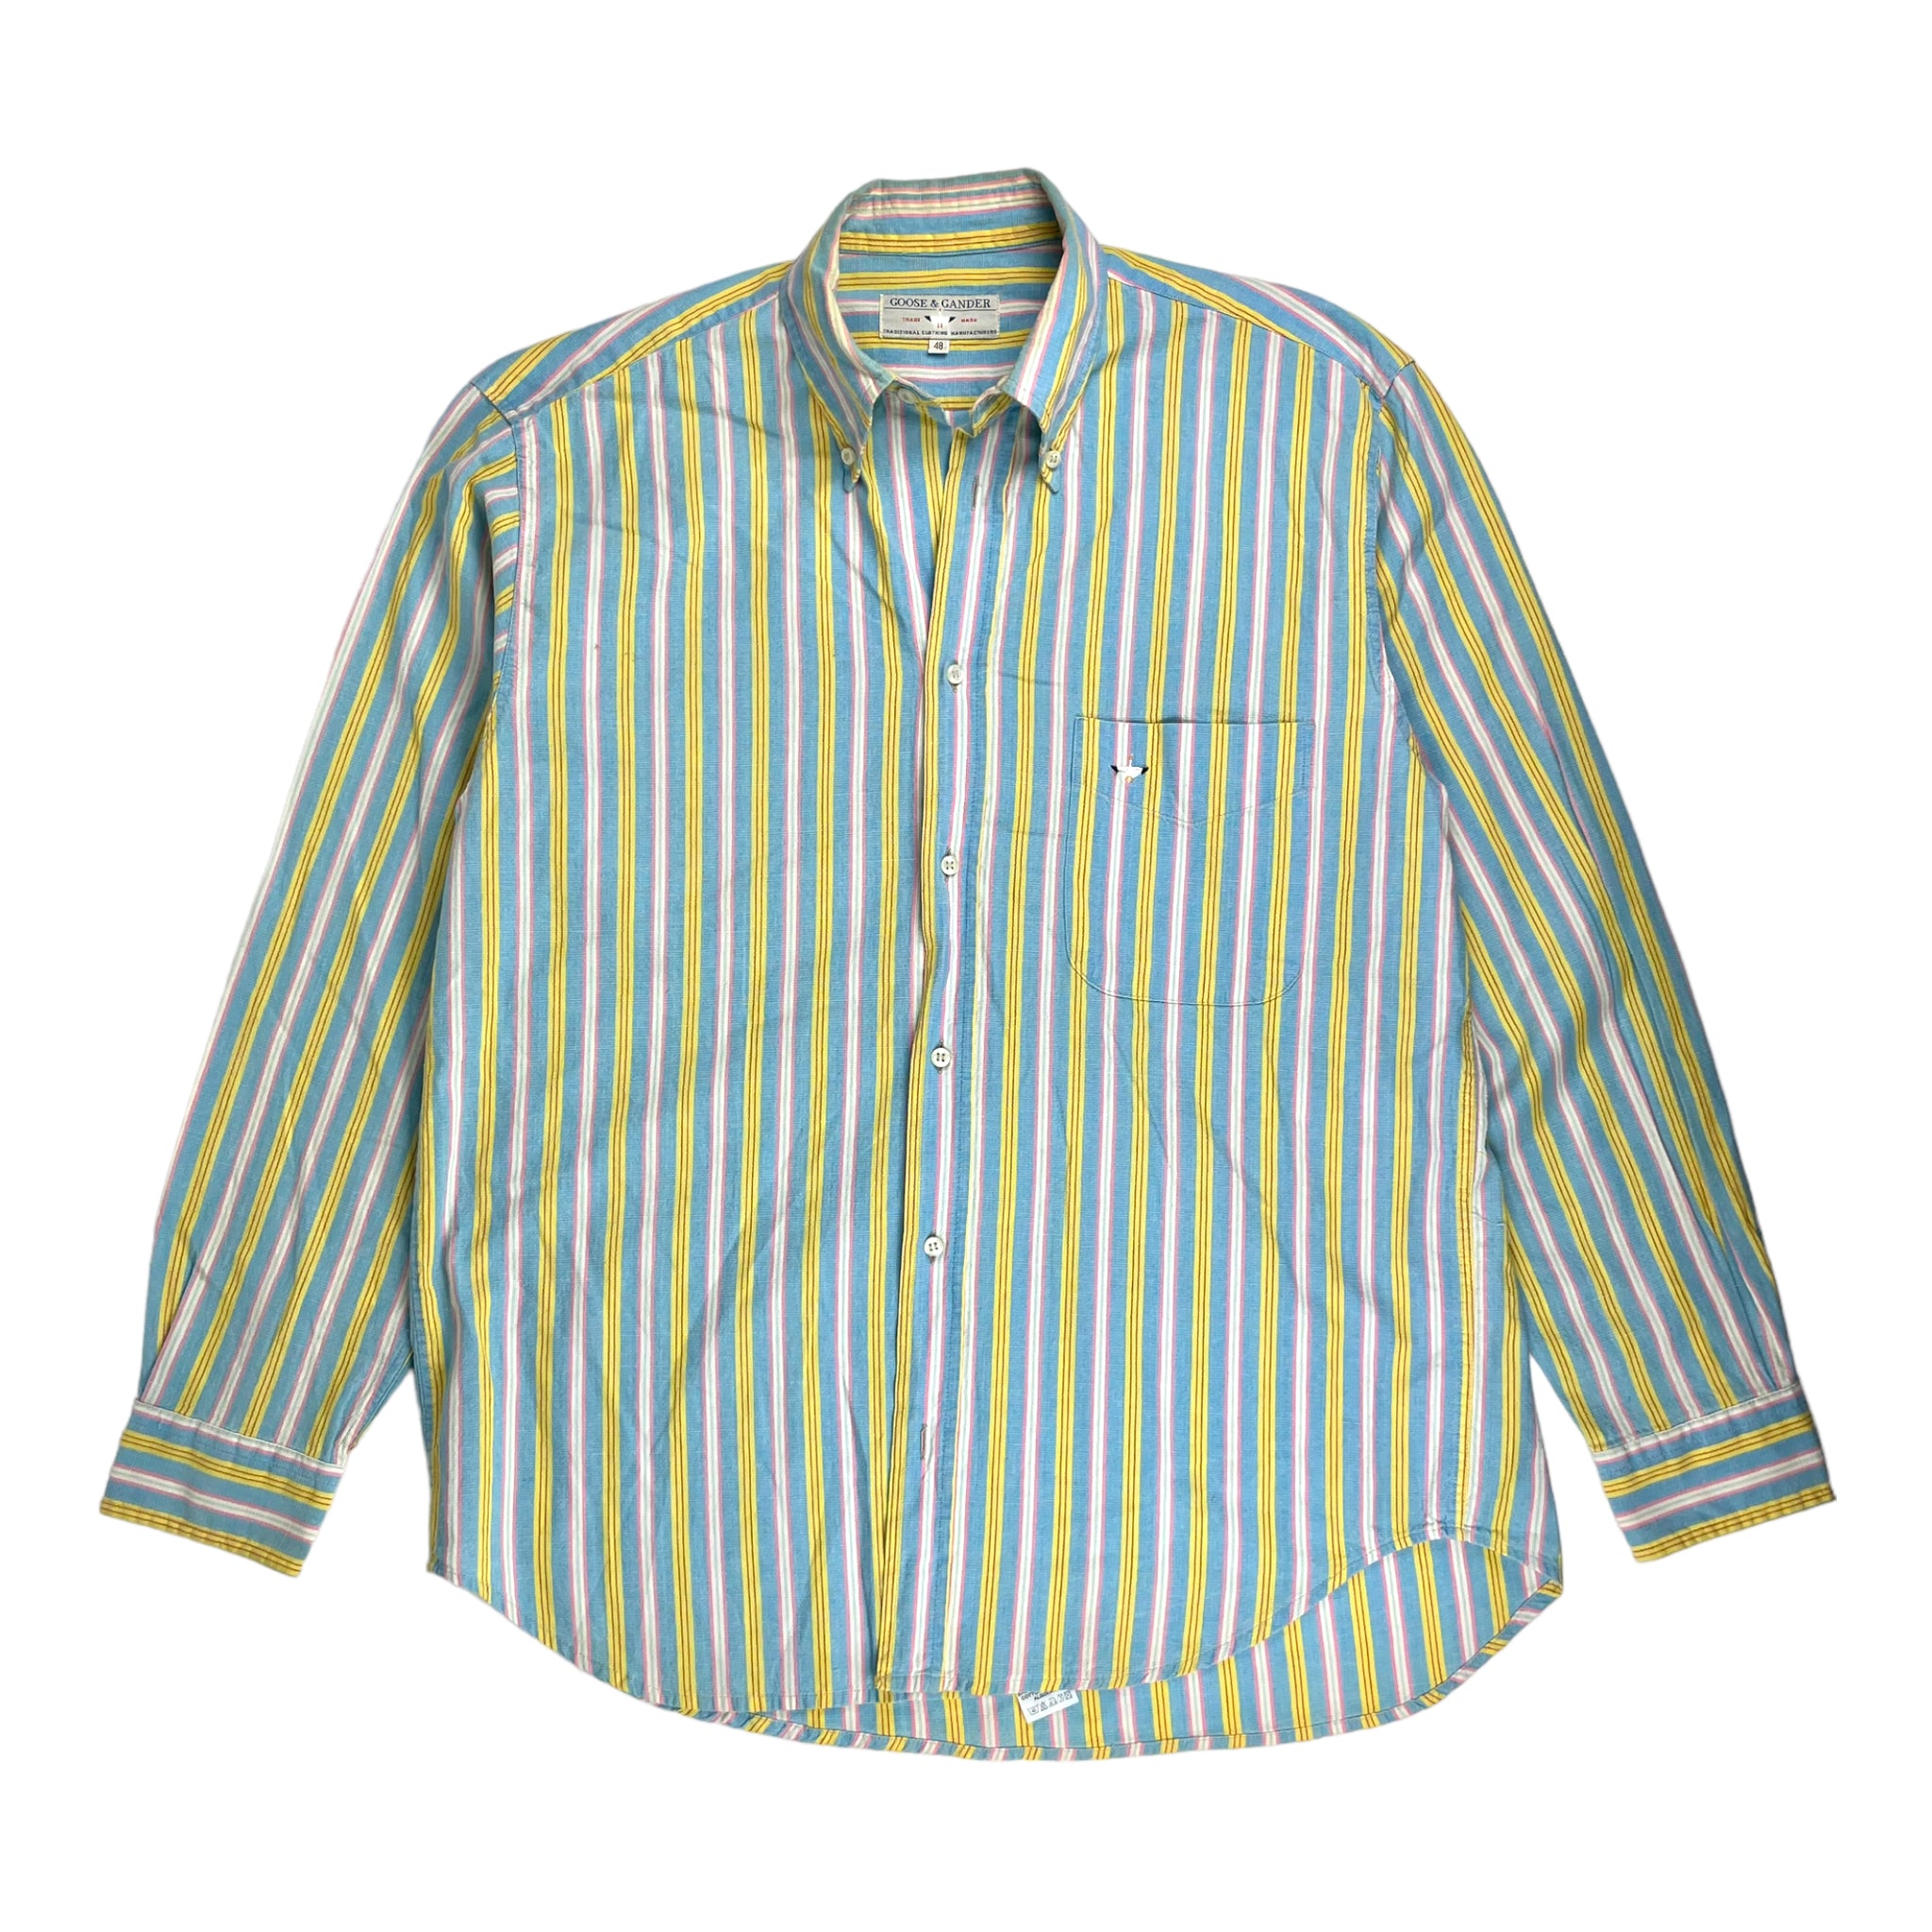 Vintage 80s Striped Shirts